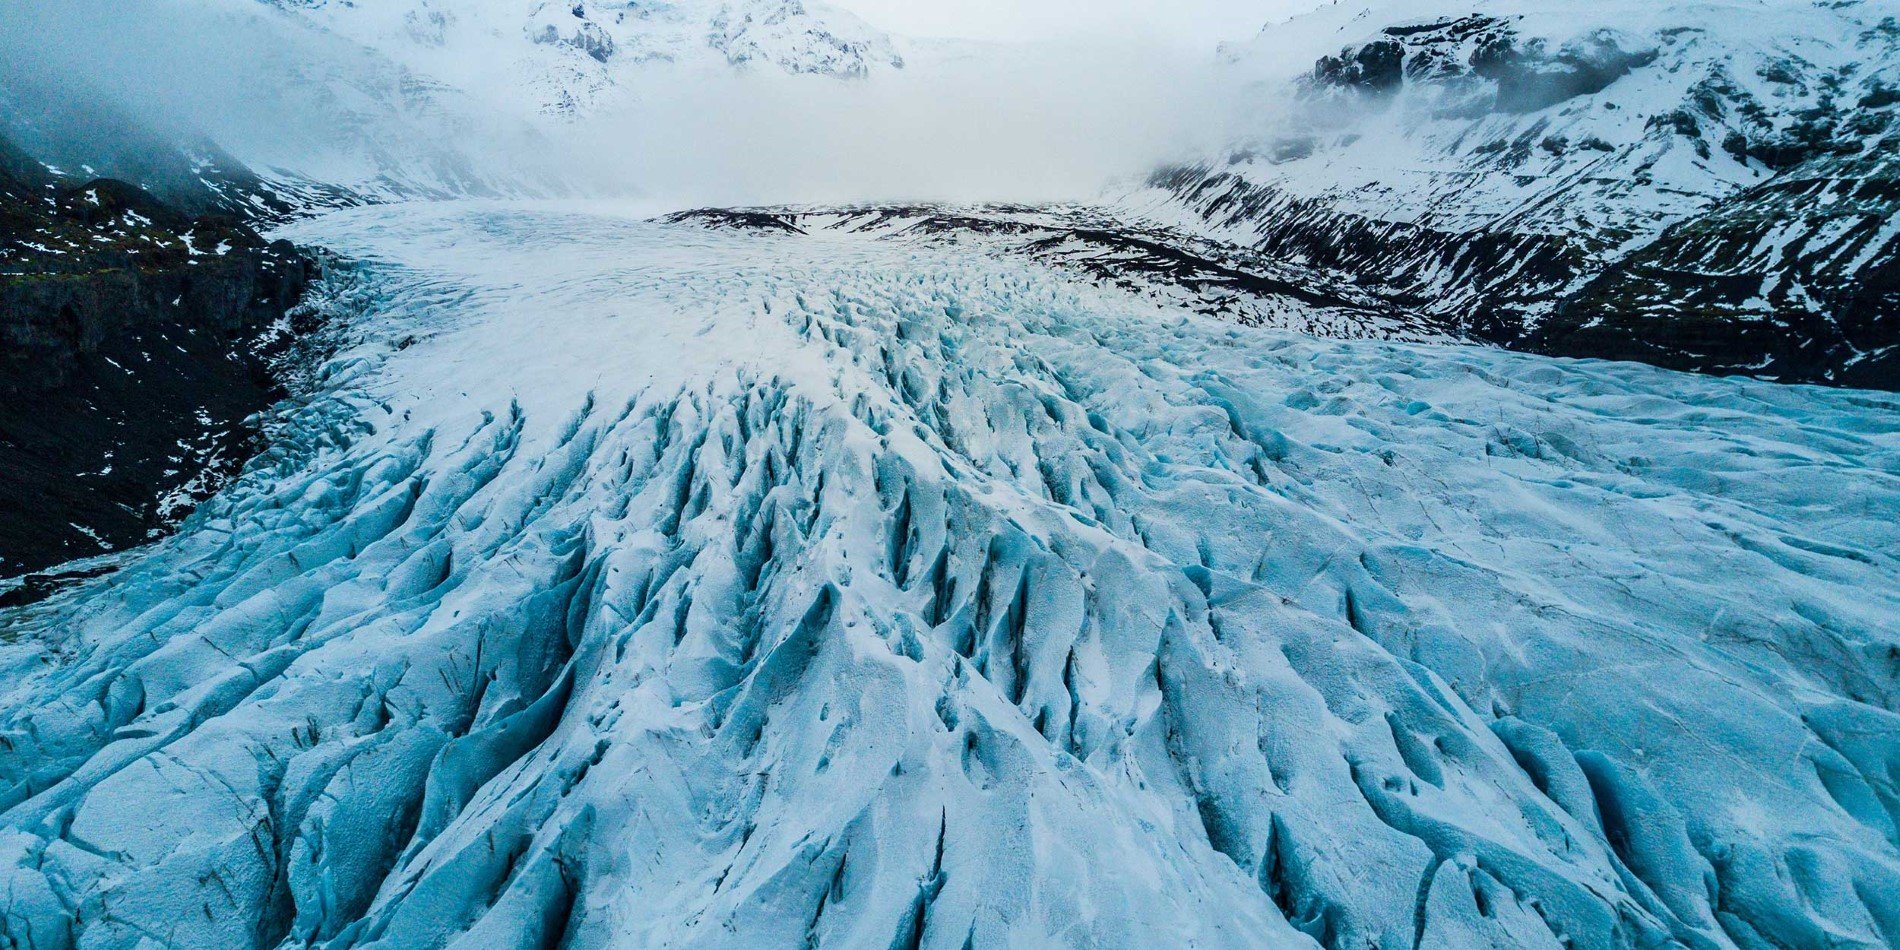 Sveitarfélagið, Hofn Iceland - textured glacier in Hofn iceland